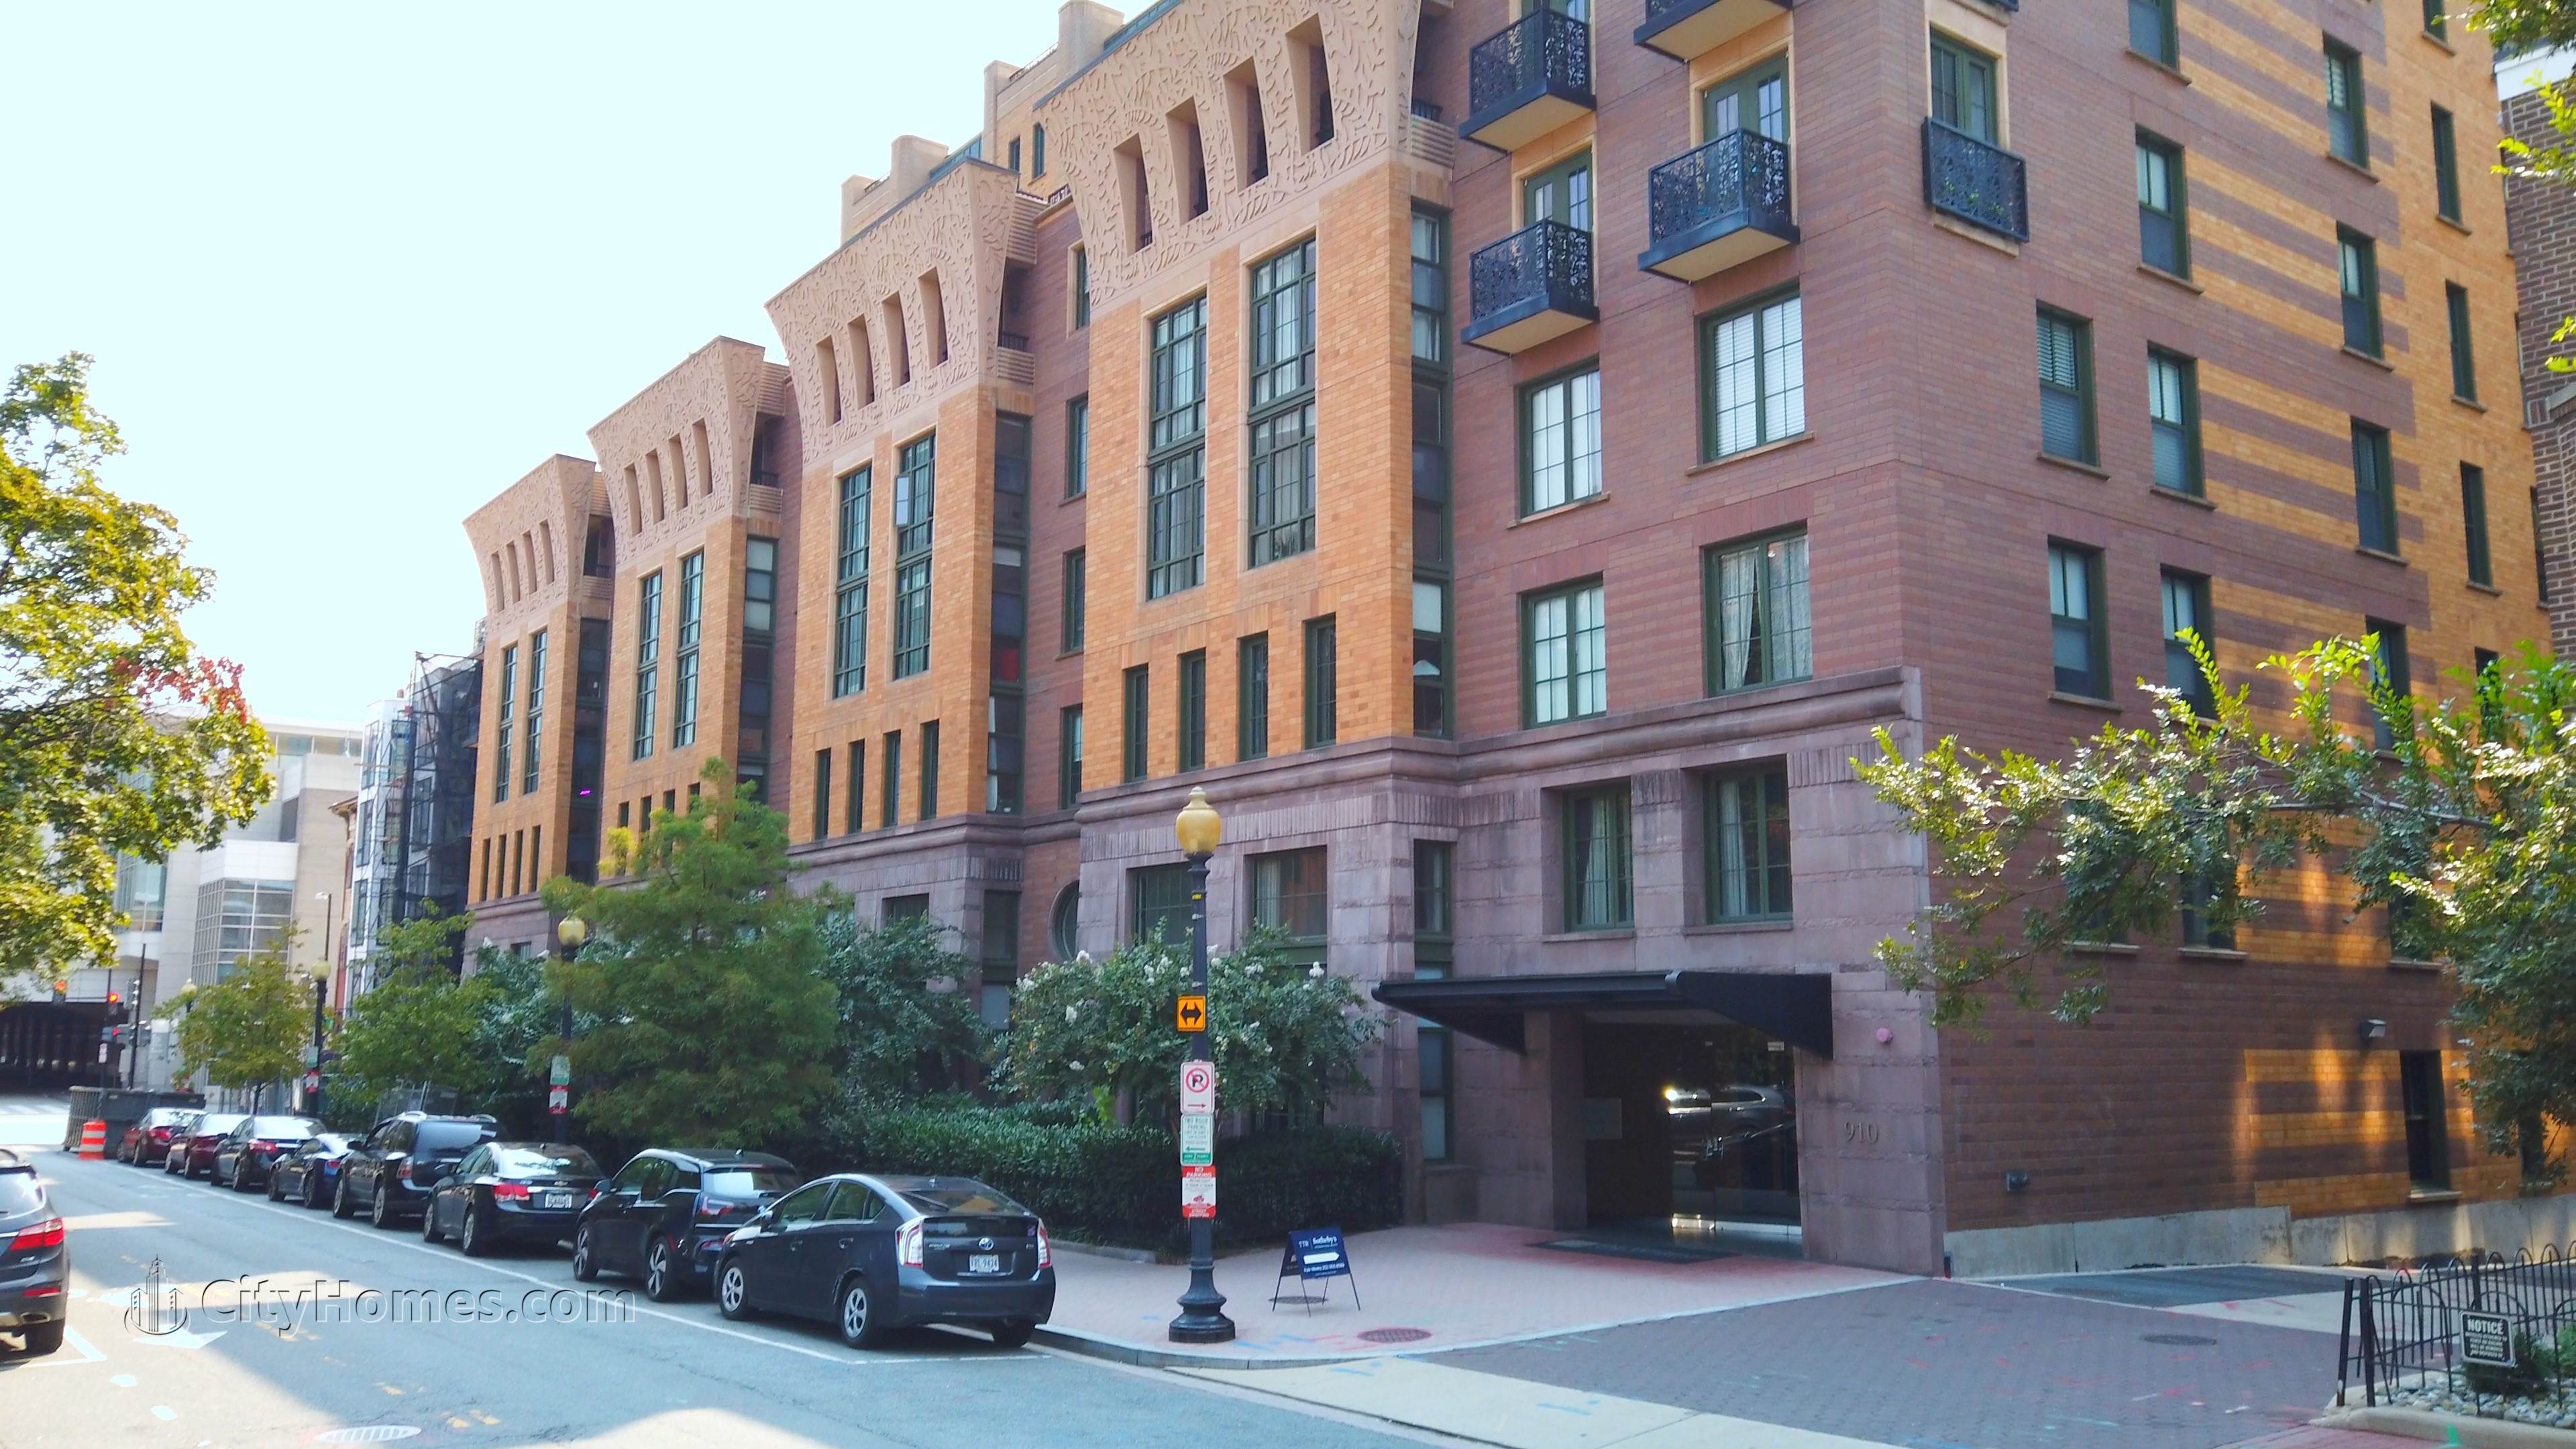 2. The Whitman building at 910 M St NW, Mount Vernon Square, Washington, DC 20001